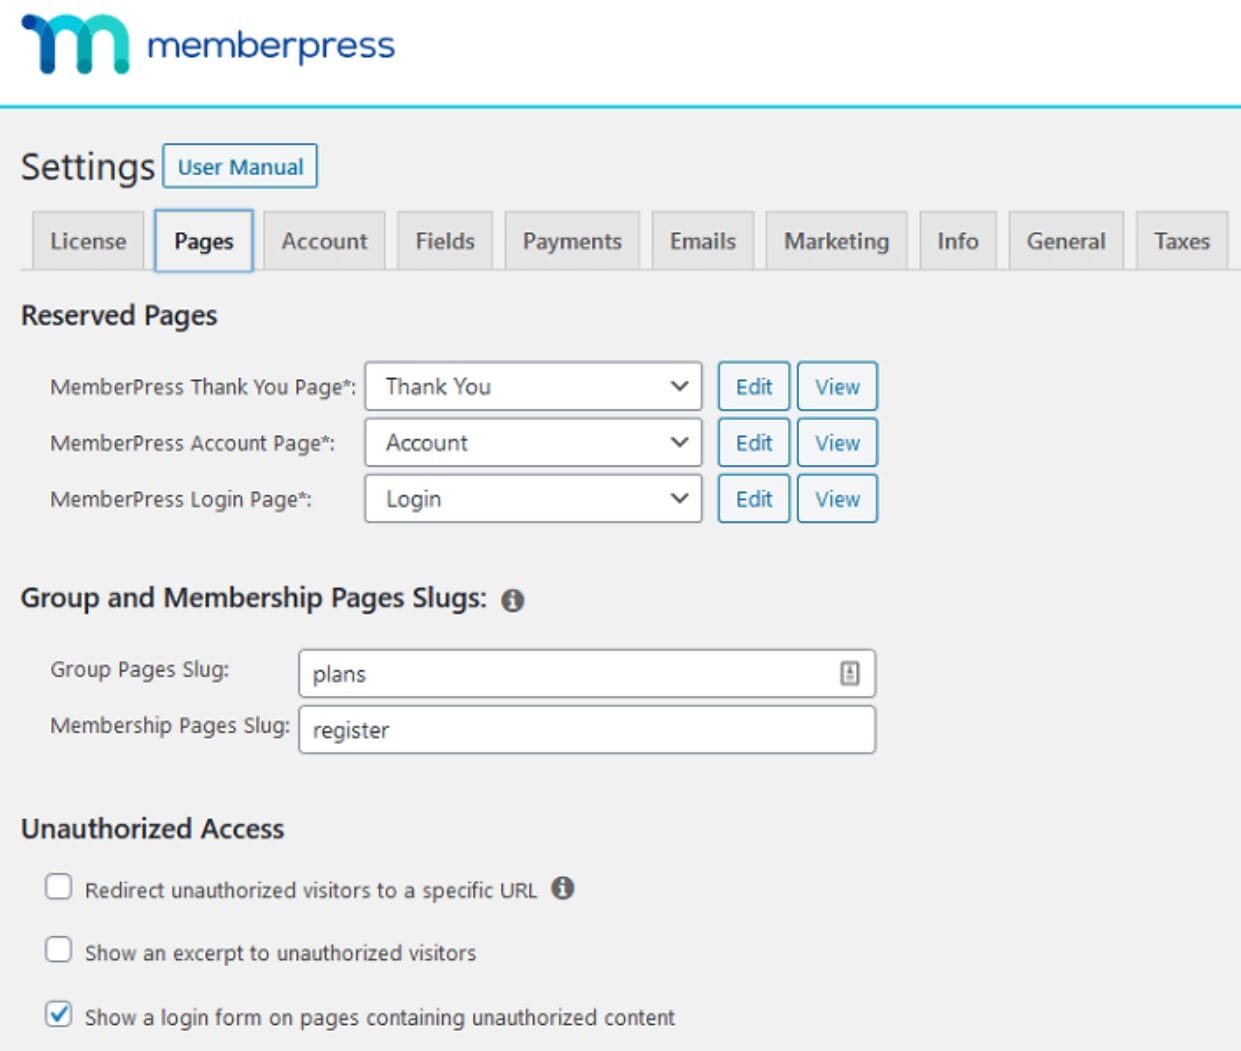 MemberPress settings page